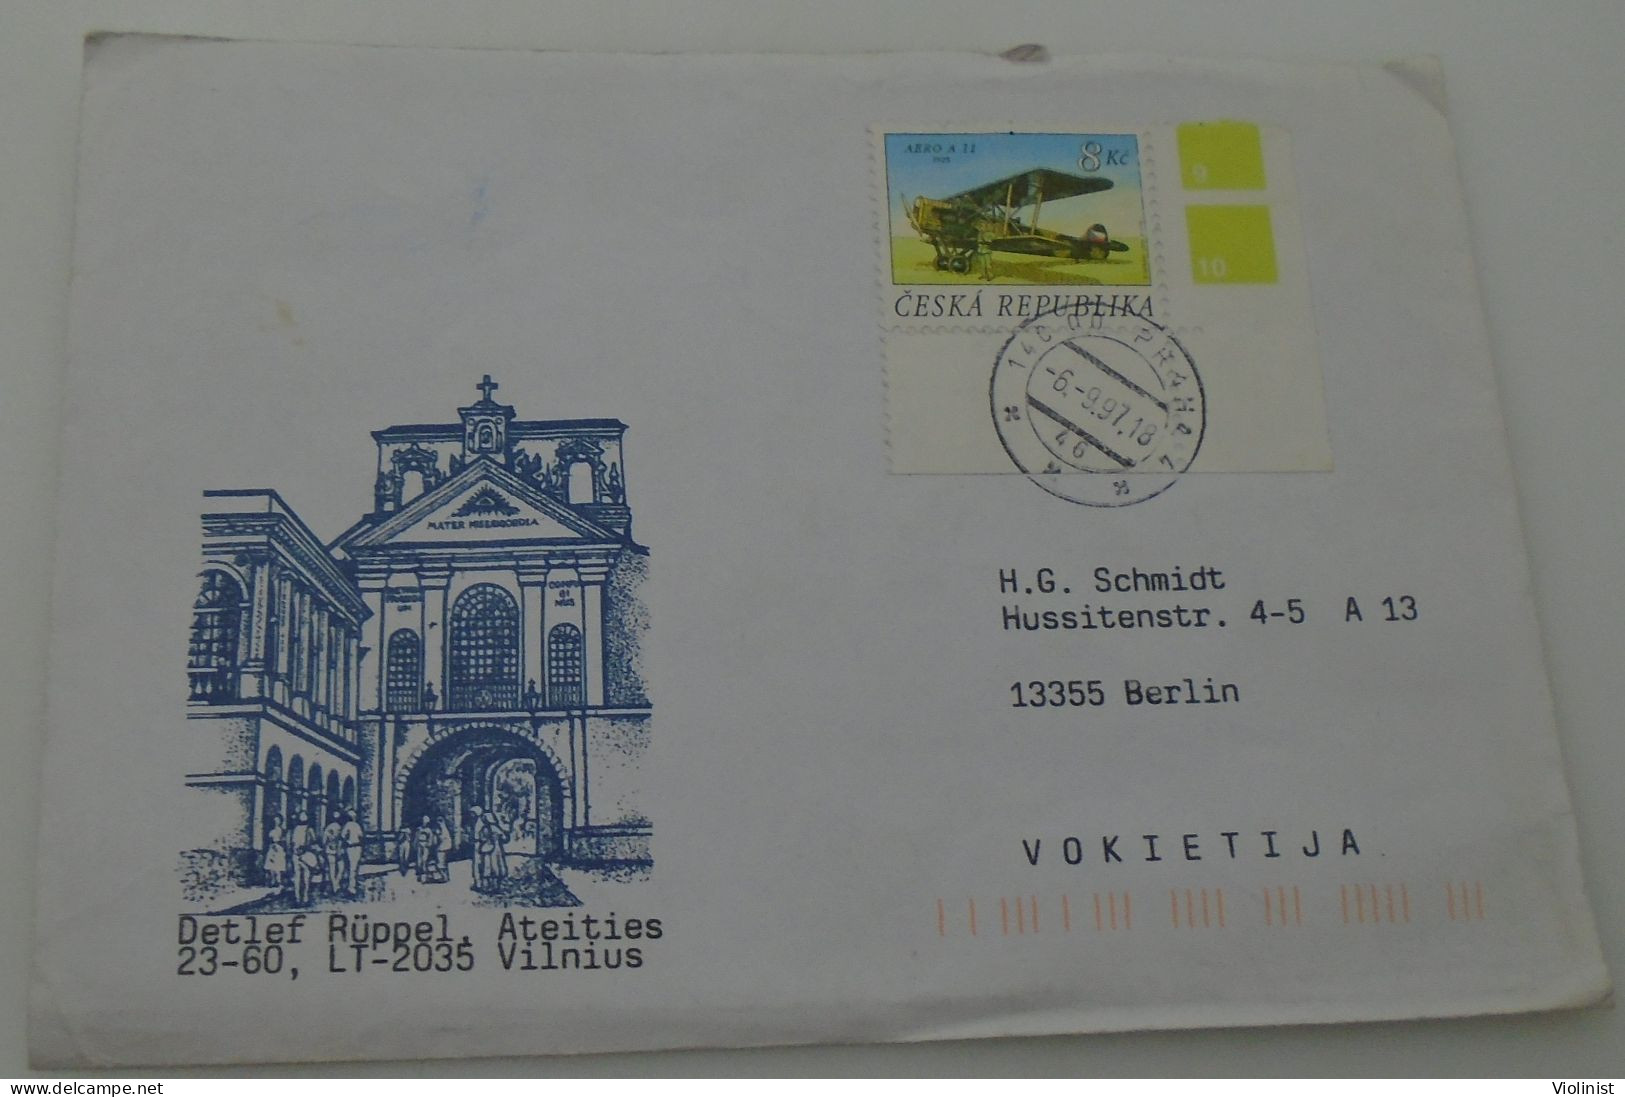 Datlef Ruppel-Ateities,Vilnius- Postmark PRAHA, Czech Republic - Enveloppes